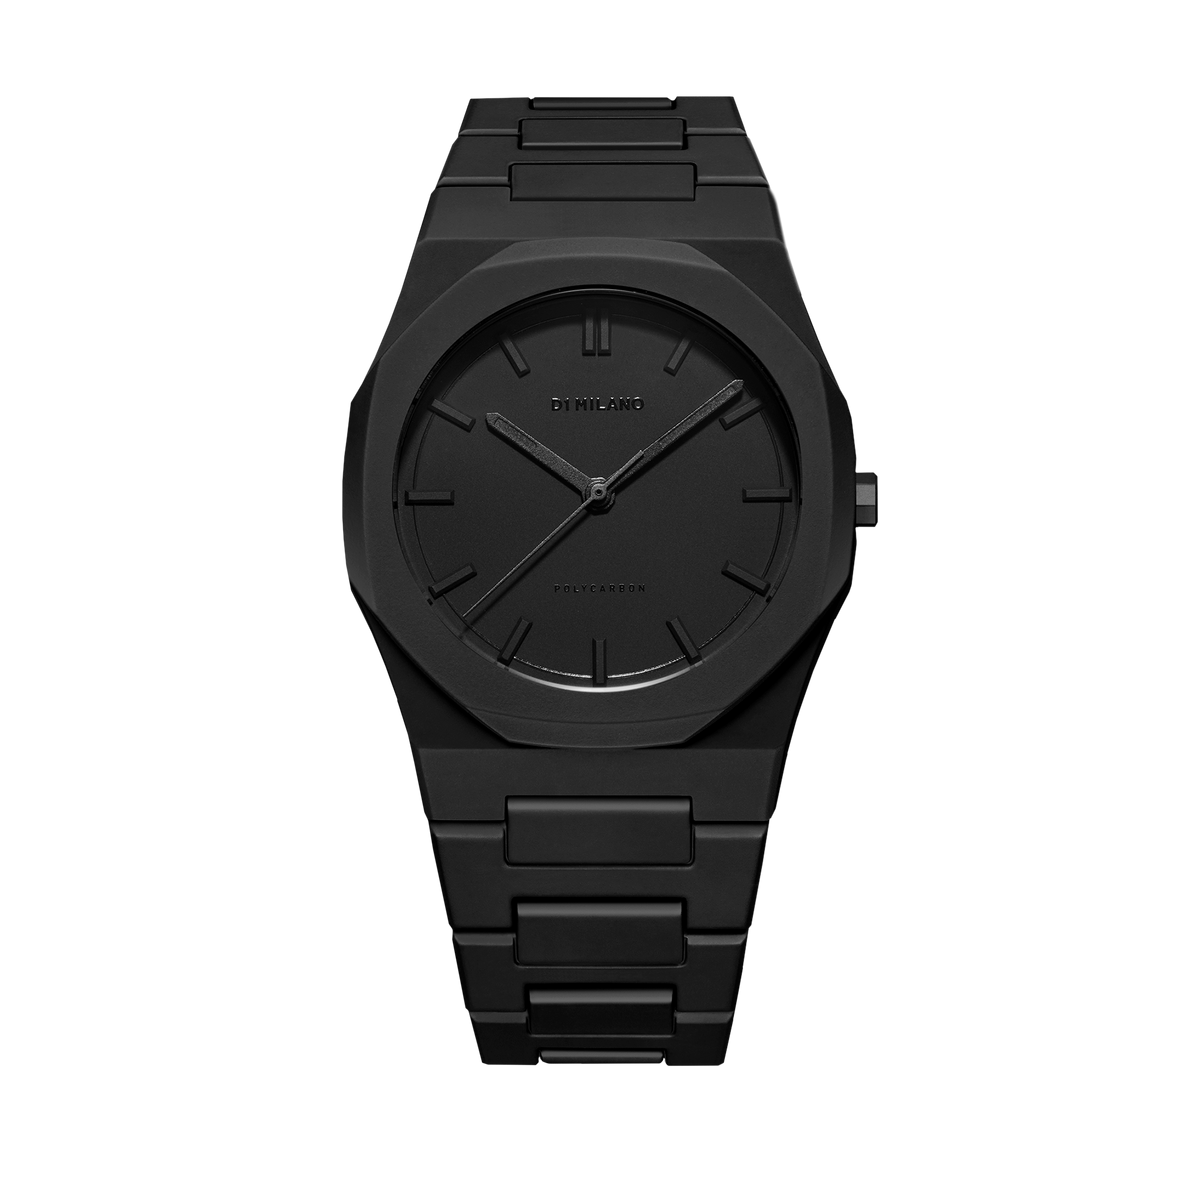 Buy D1 Milano Analog Blue Dial Men's Watch-PCBJ21 at Amazon.in